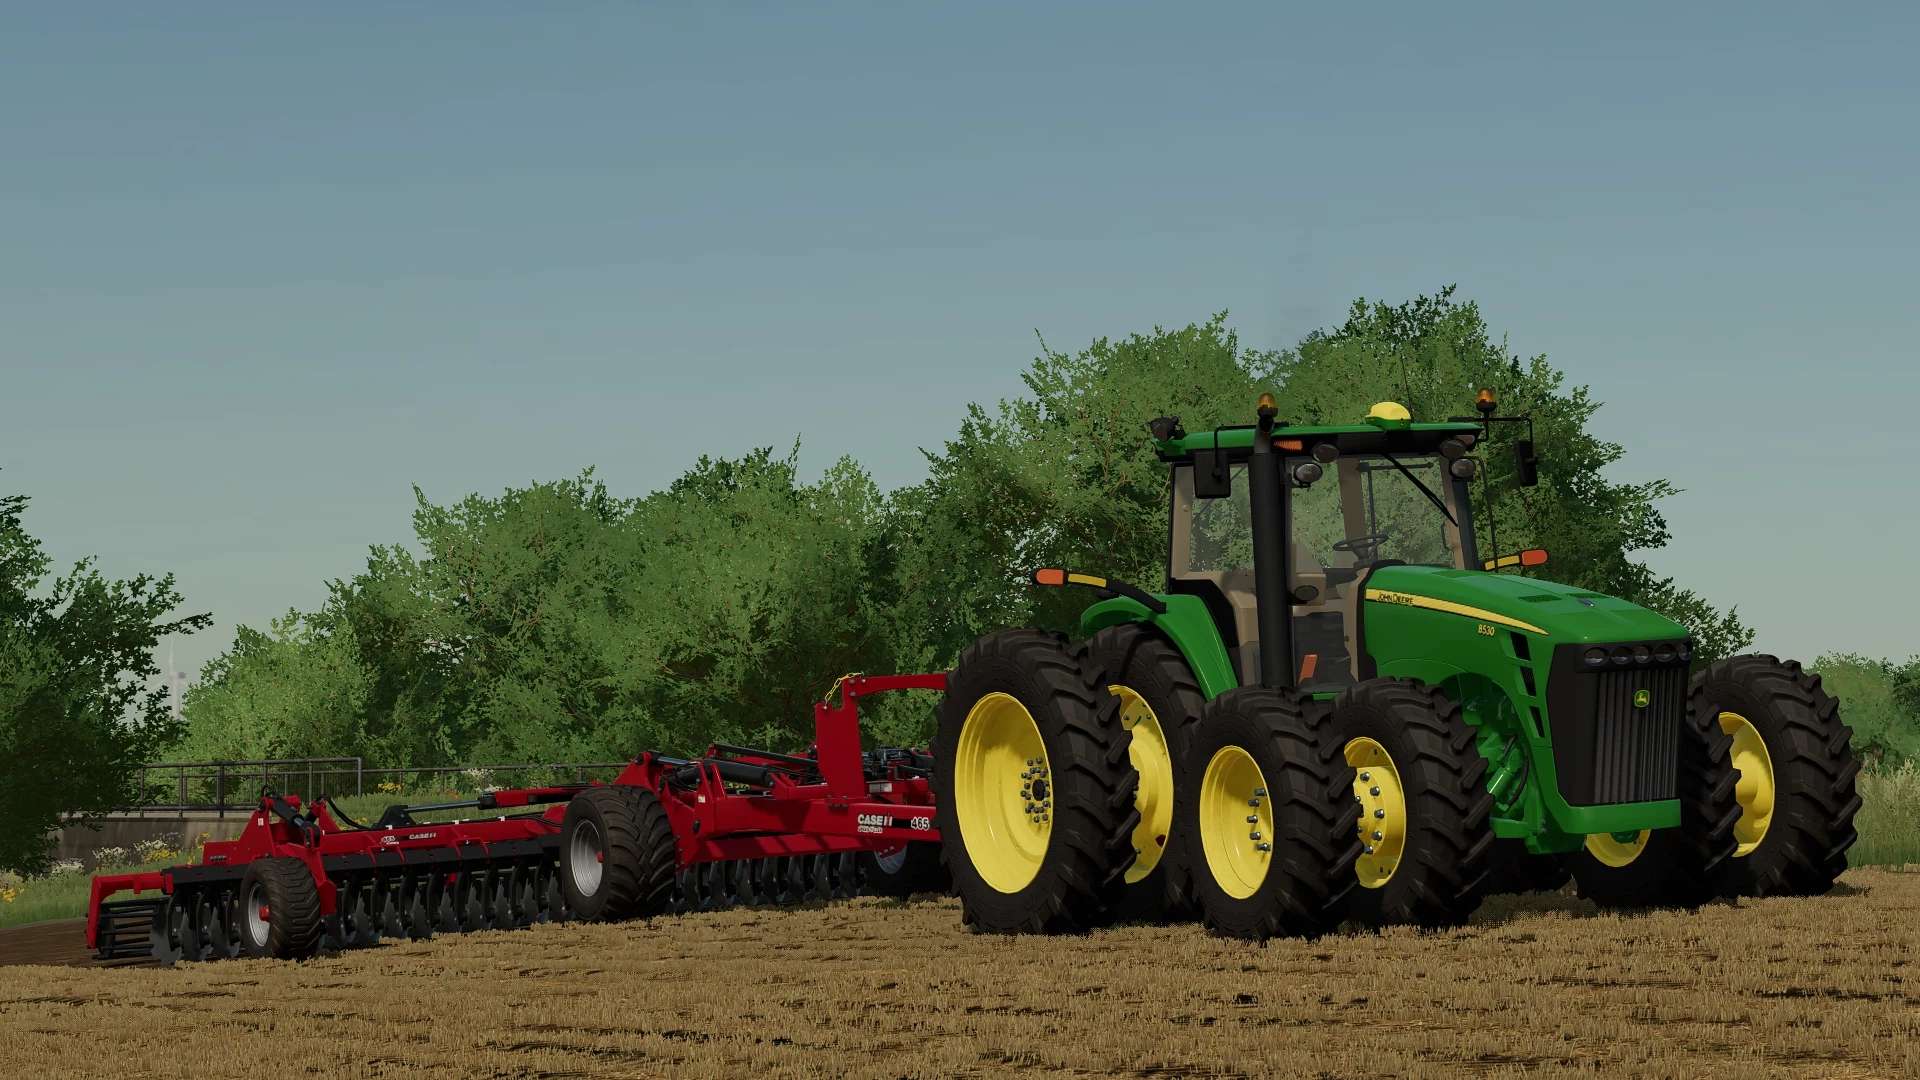 John Deere 8030 Series V4000 Fs22 Mod Farming Simulator 22 Mod 2956